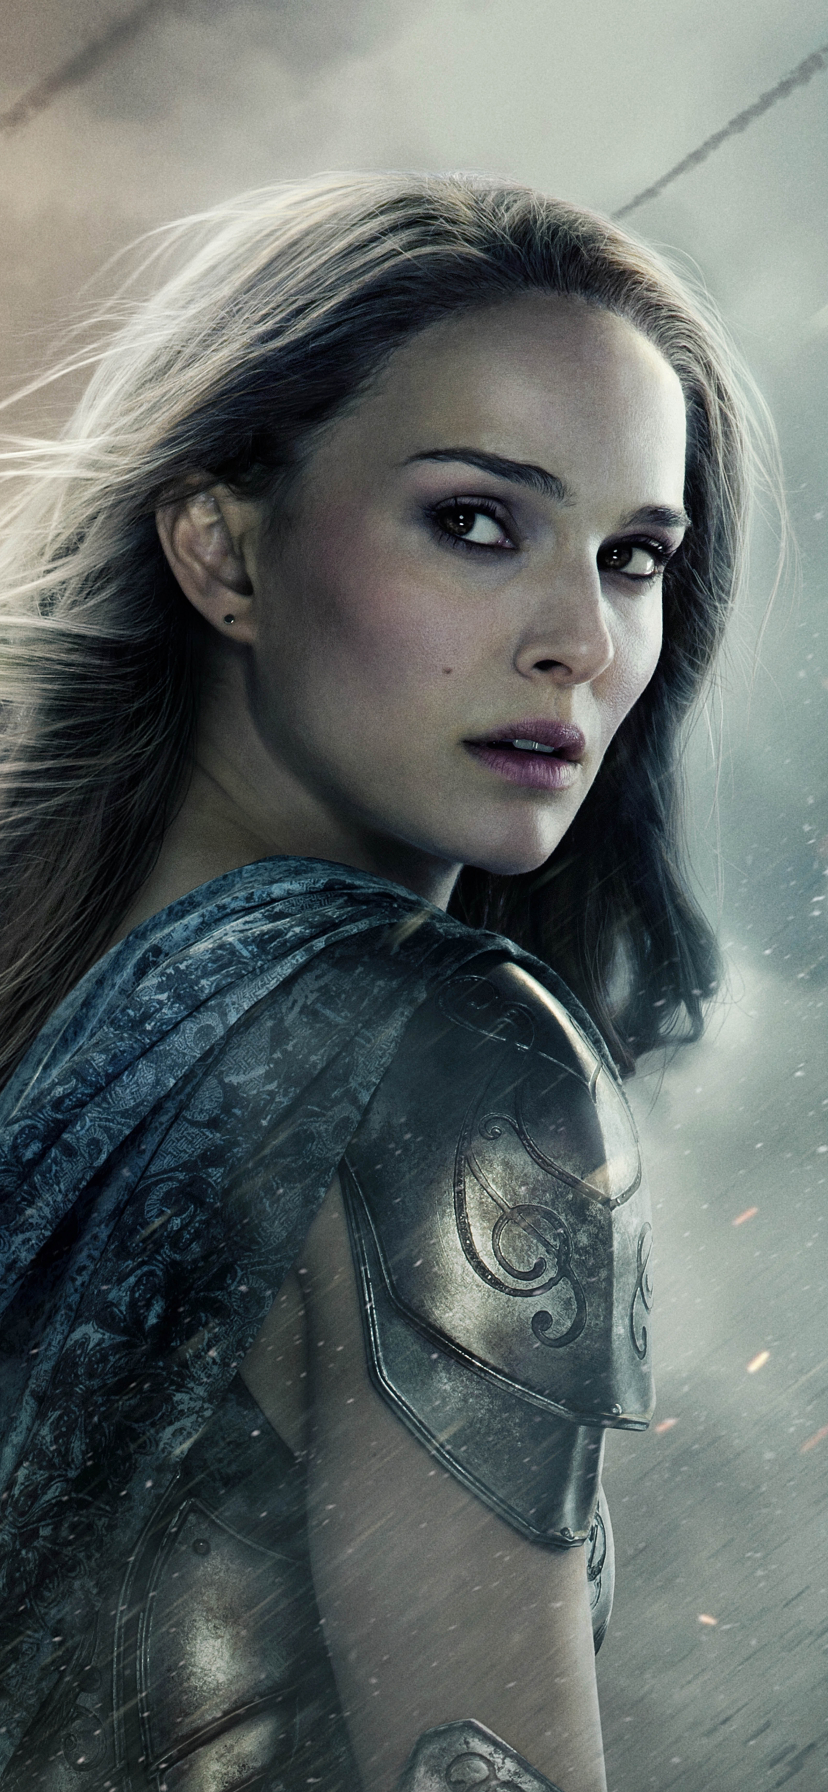 Descarga gratuita de fondo de pantalla para móvil de Natalie Portman, Películas, Thor, Jane Fomentar, Thor: El Mundo Oscuro.